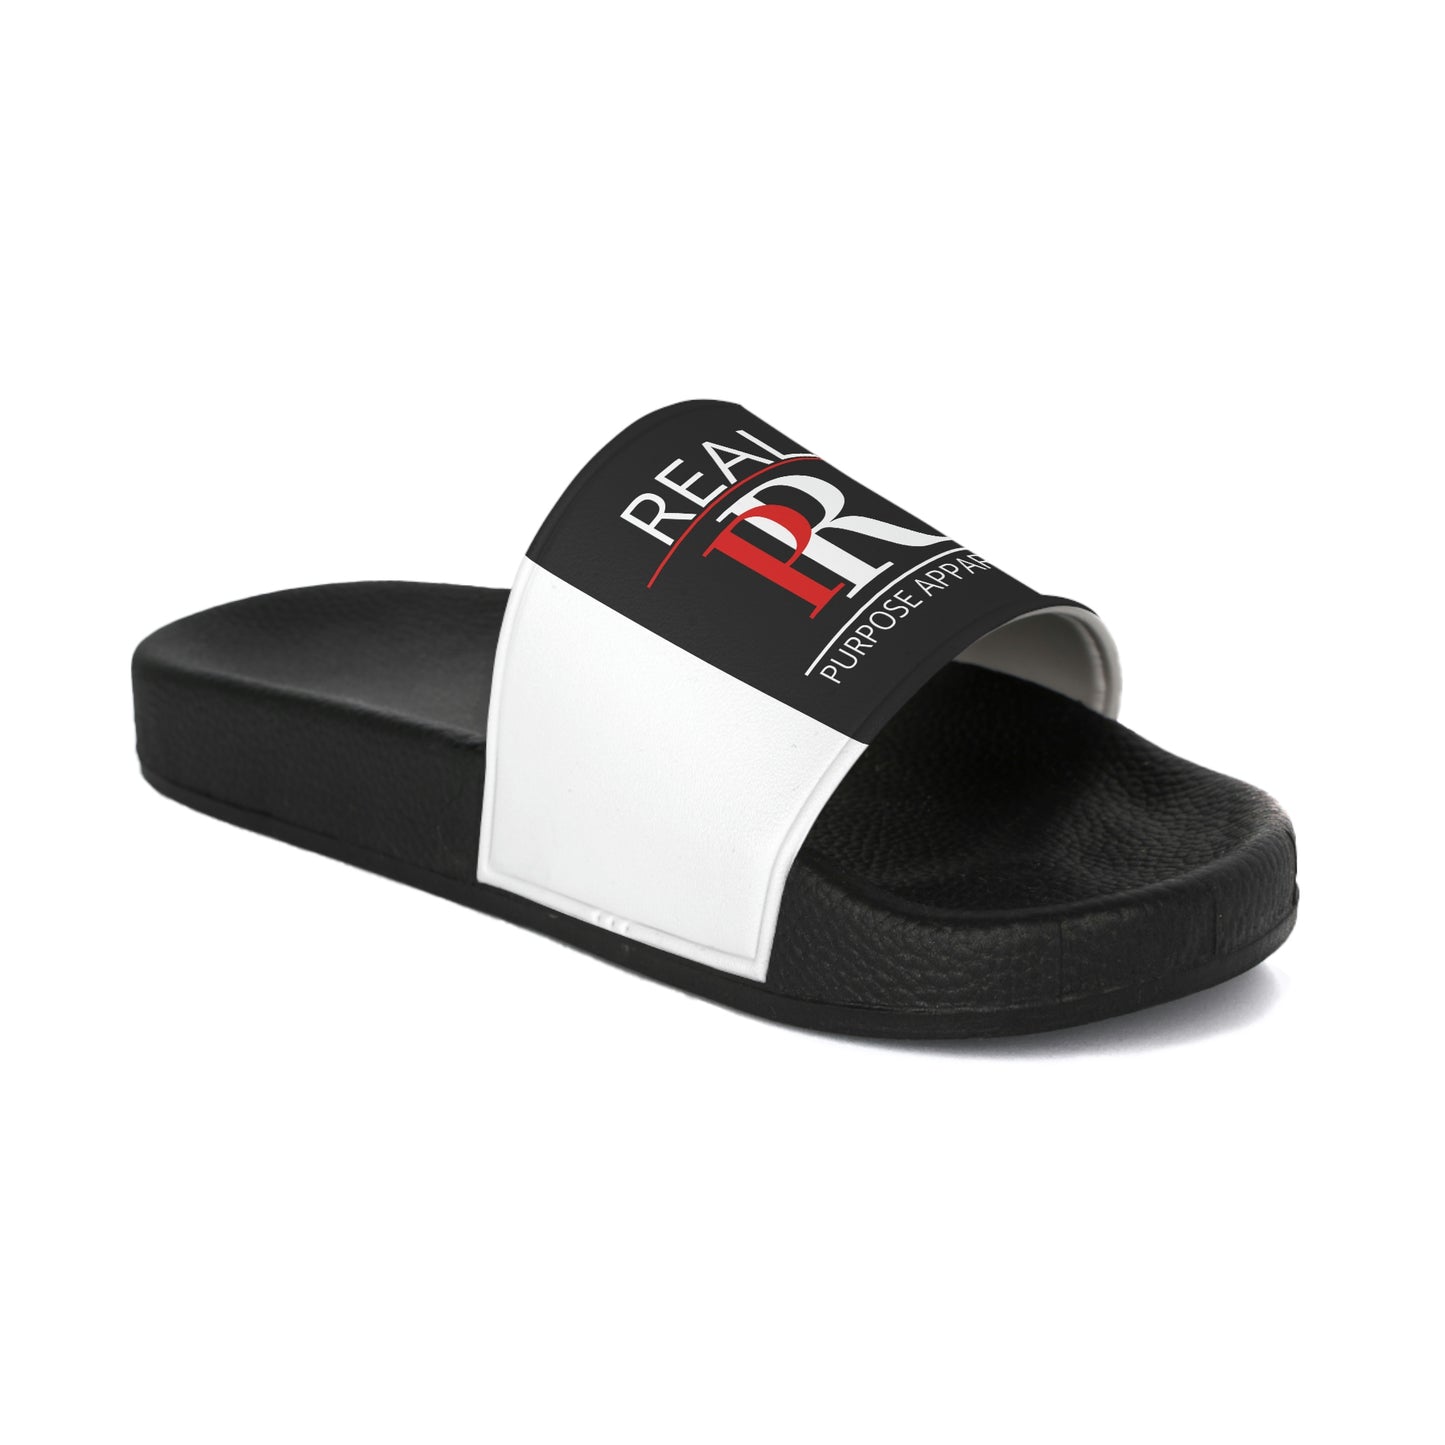 Real Purpose Apparel Women's Slide Sandals